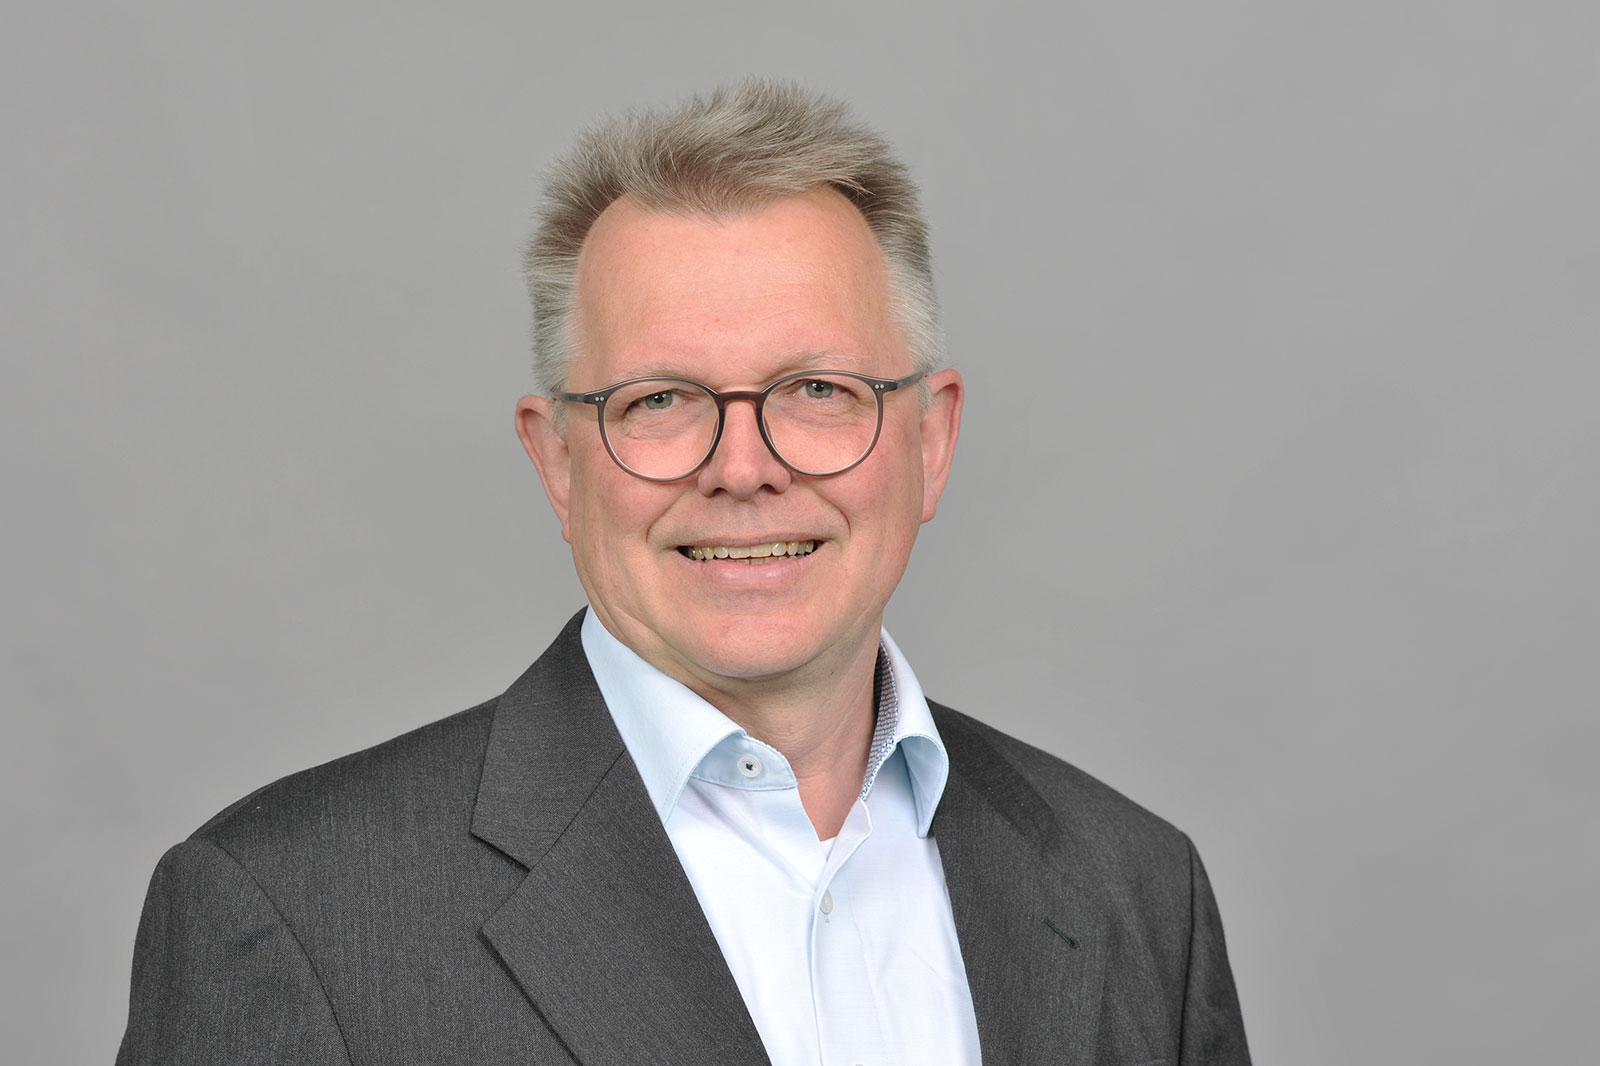 Udo Eickhoff | Head of Electrical, Instrumentation & Control Engineering @ RWE Technology GmbH